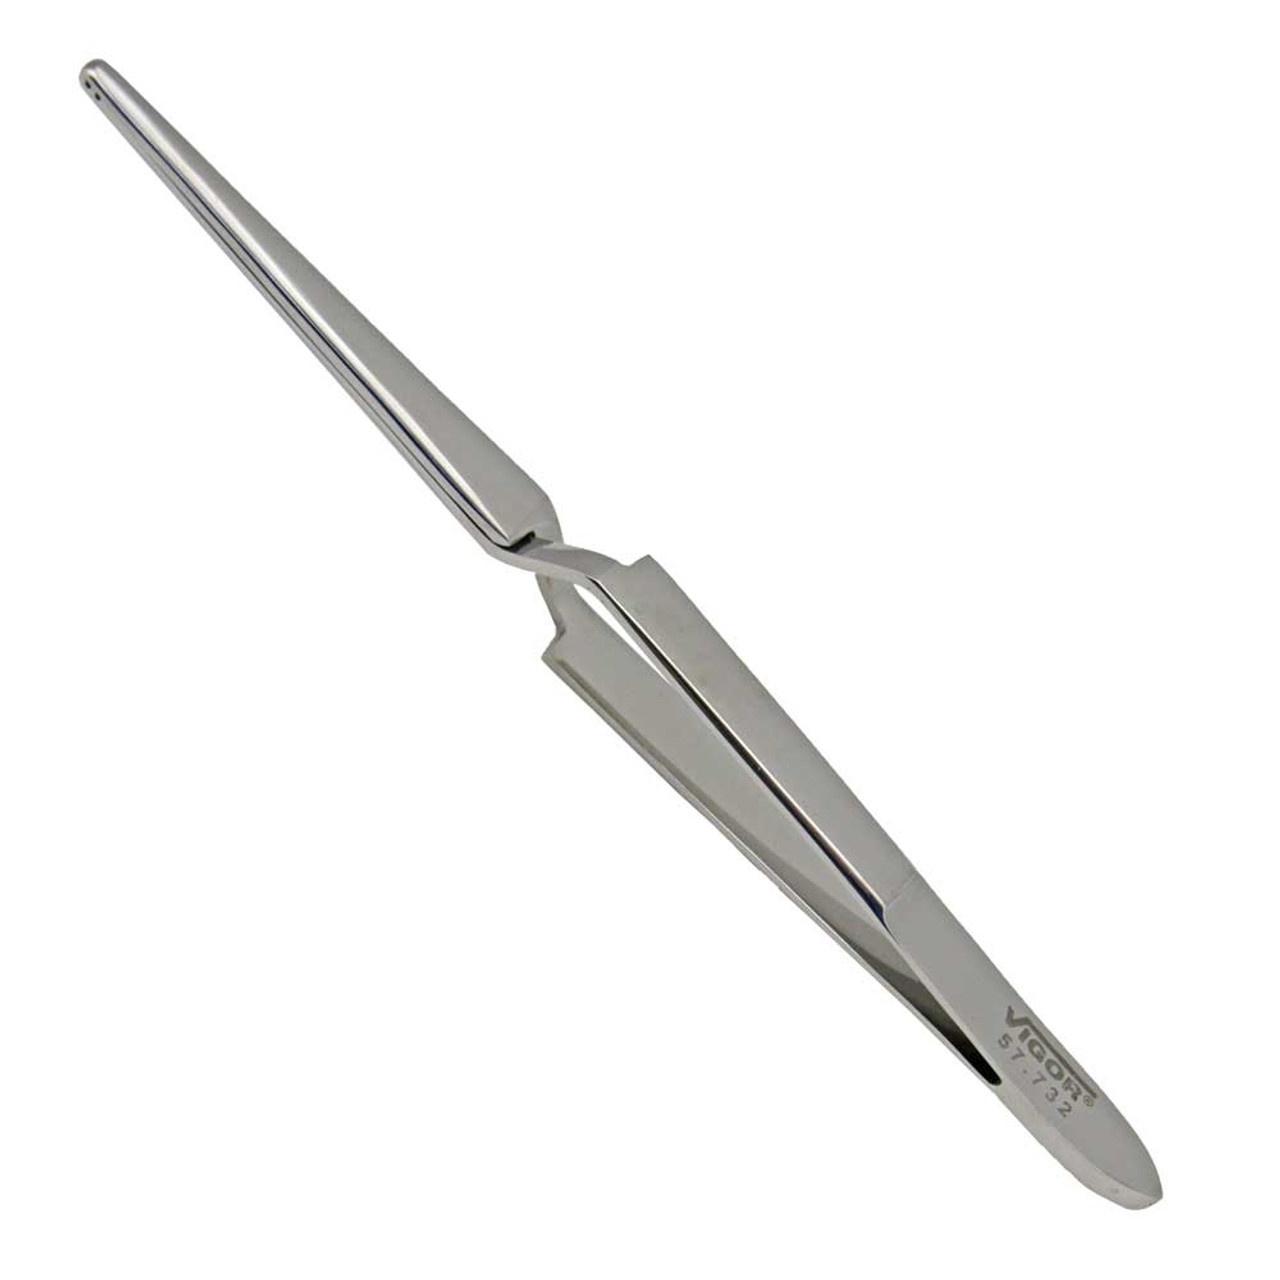 Reverse Action Fiber Grip Tweezers- Straight - Model Craft Tools USA